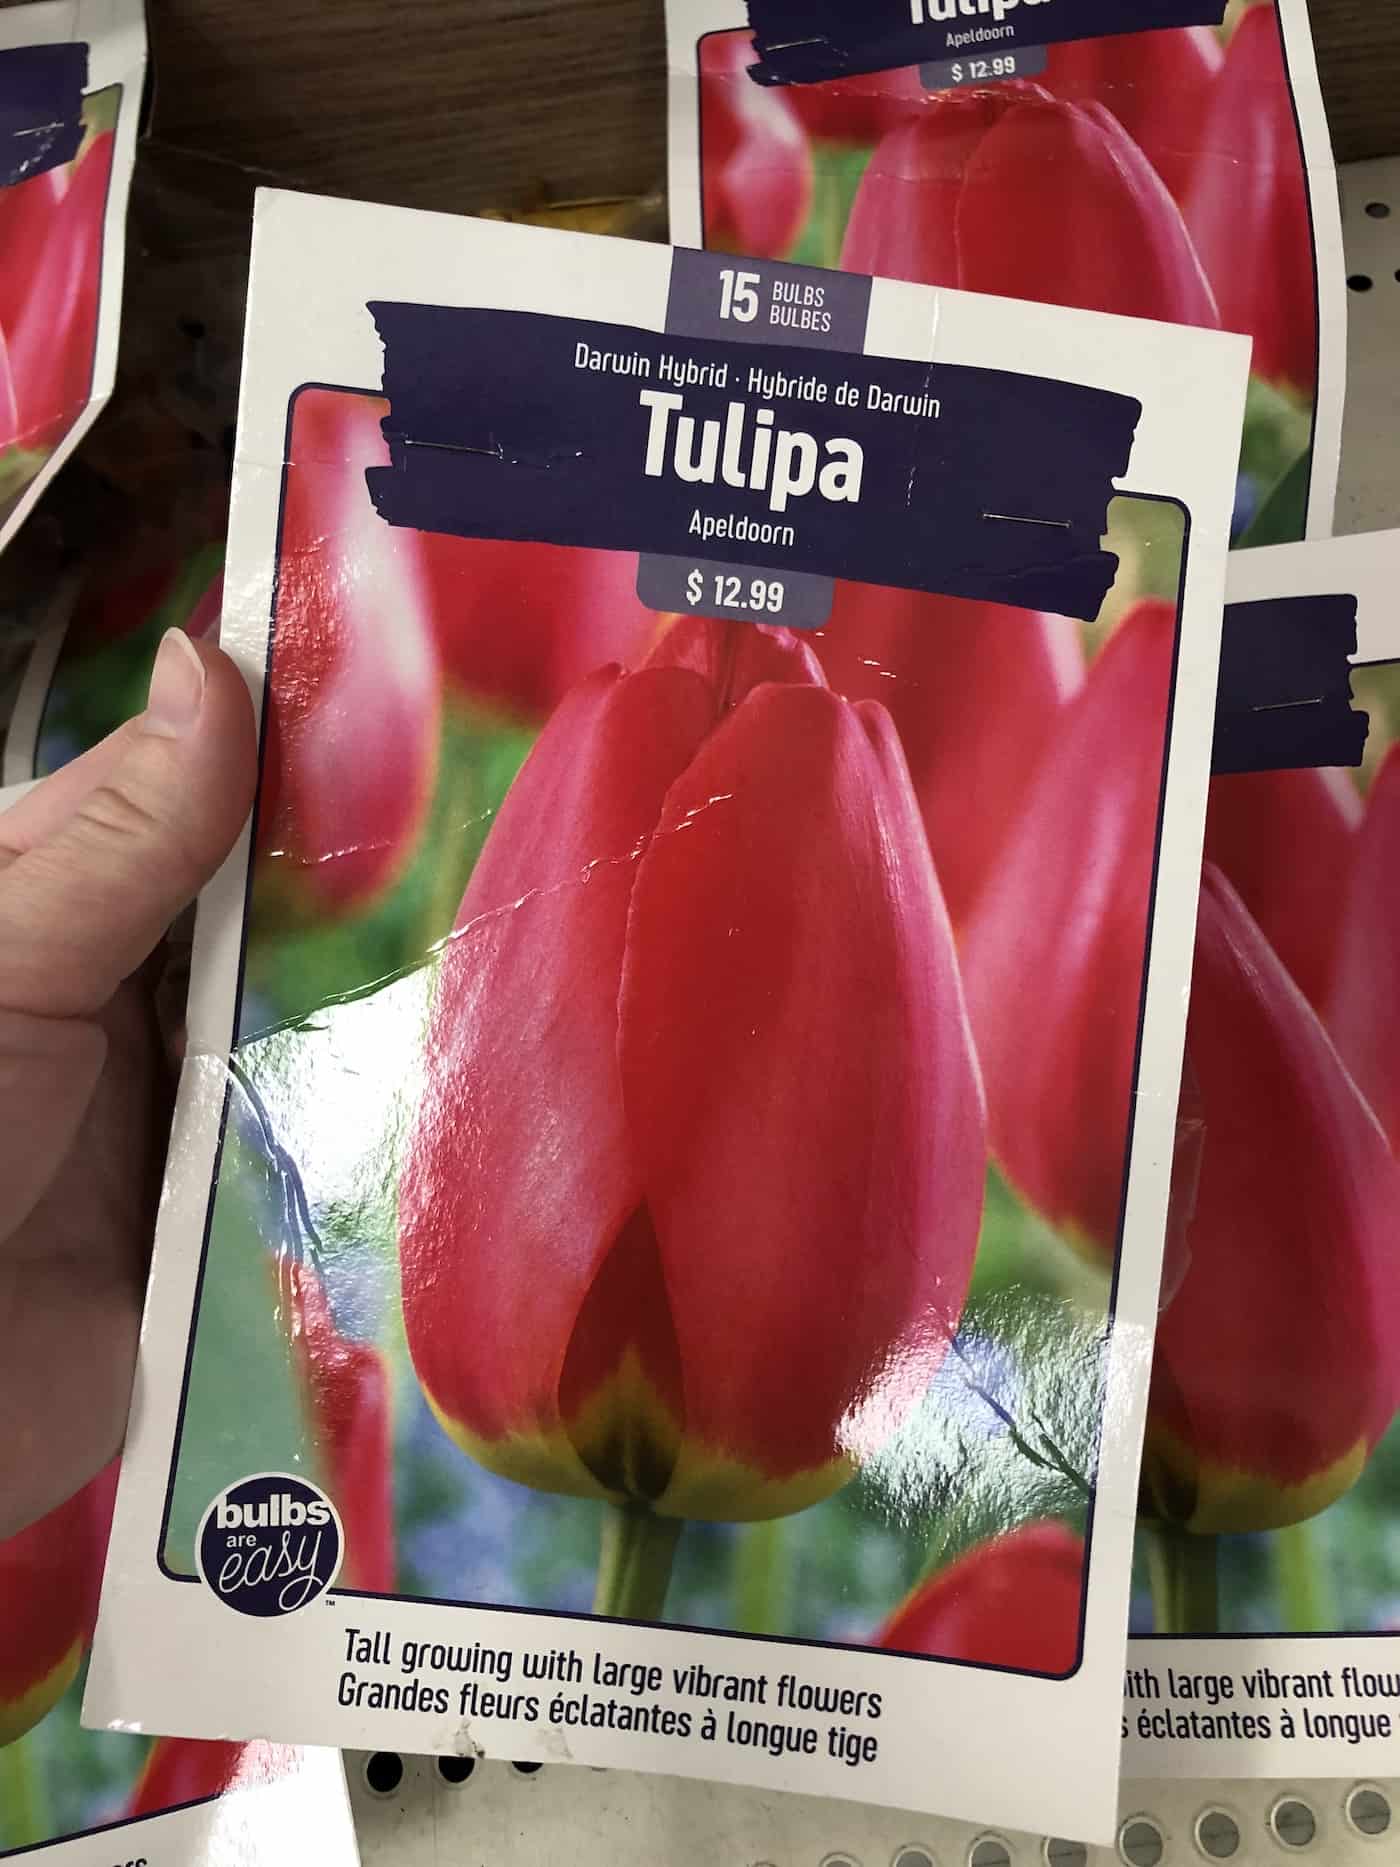 Apeldoorn darwin hybrid tulips